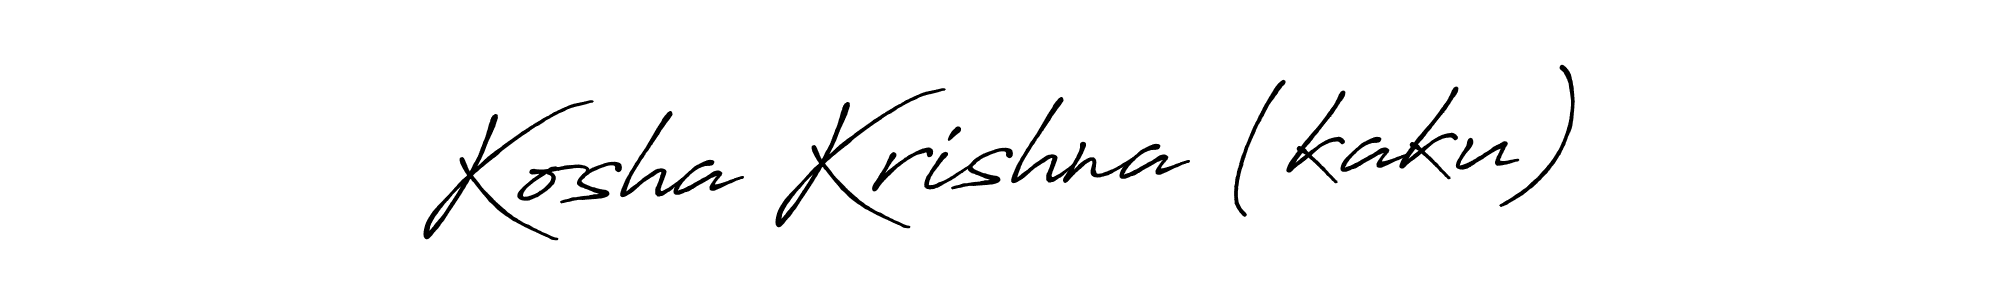 Make a beautiful signature design for name Kosha Krishna (kaku). Use this online signature maker to create a handwritten signature for free. Kosha Krishna (kaku) signature style 7 images and pictures png